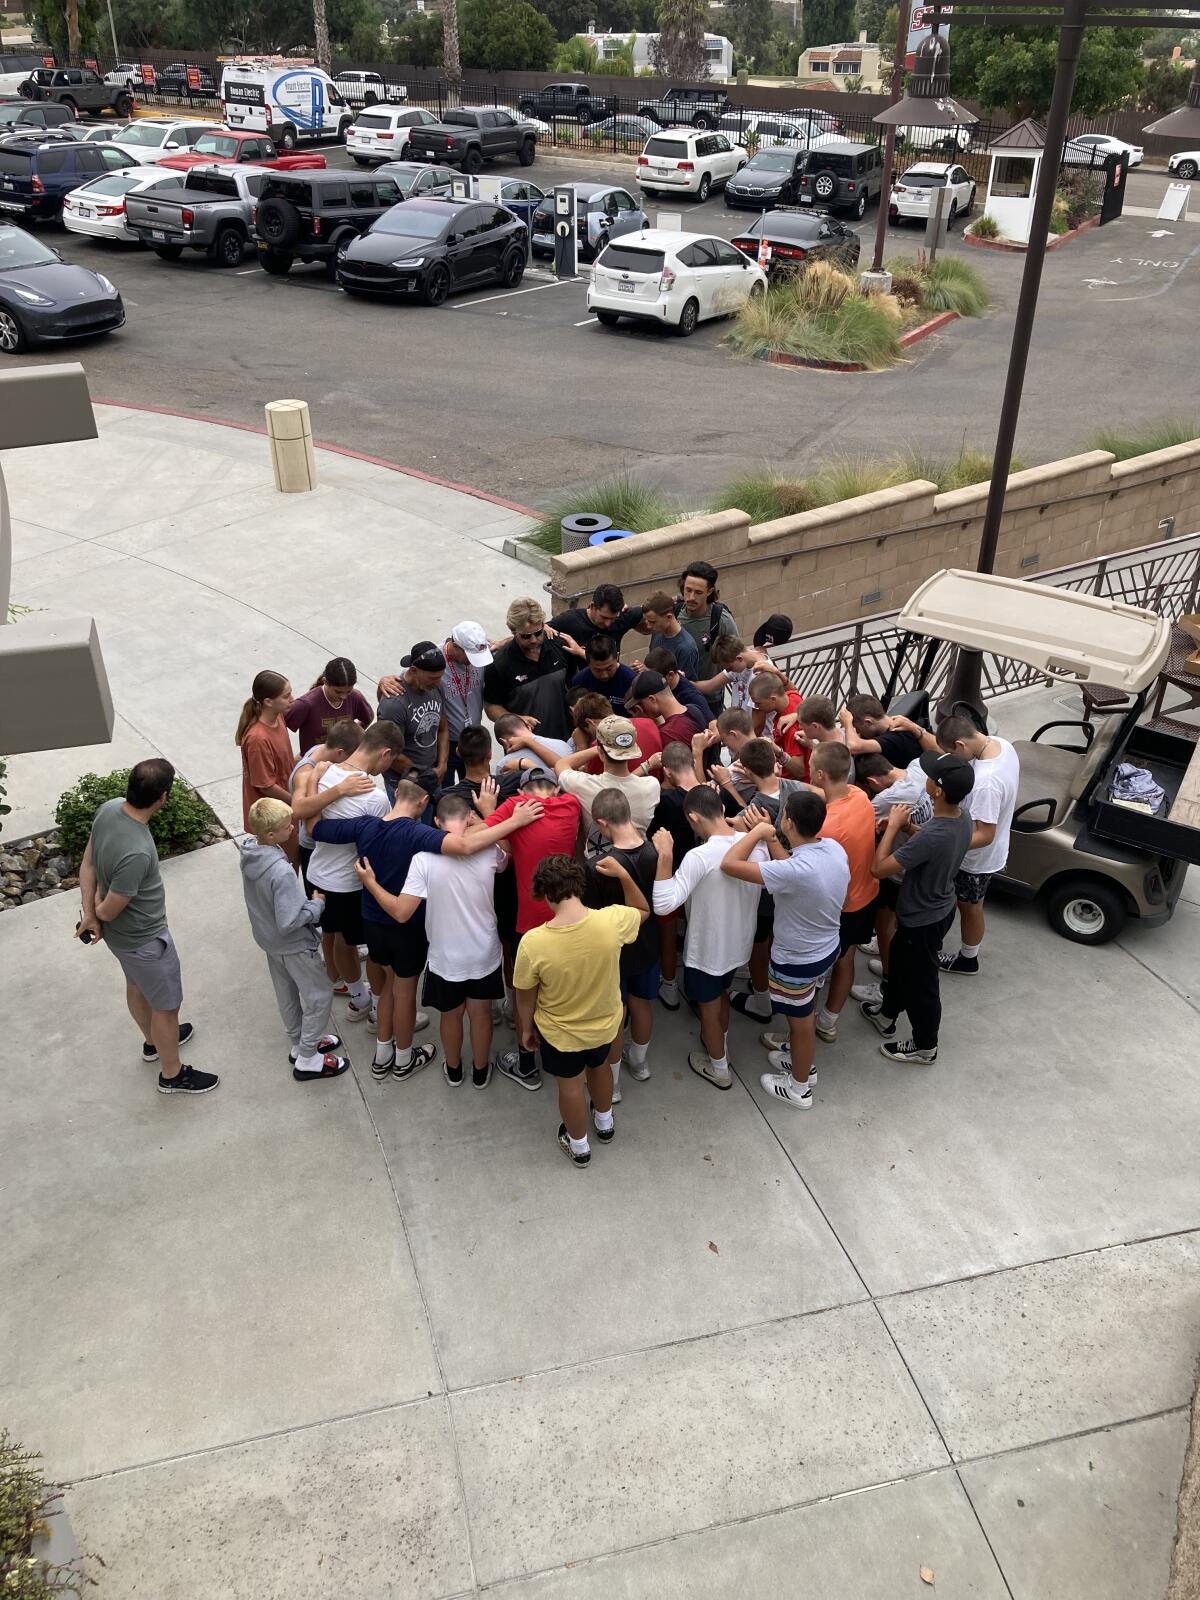 The JV football team met before painting to pray over the neighborhood.